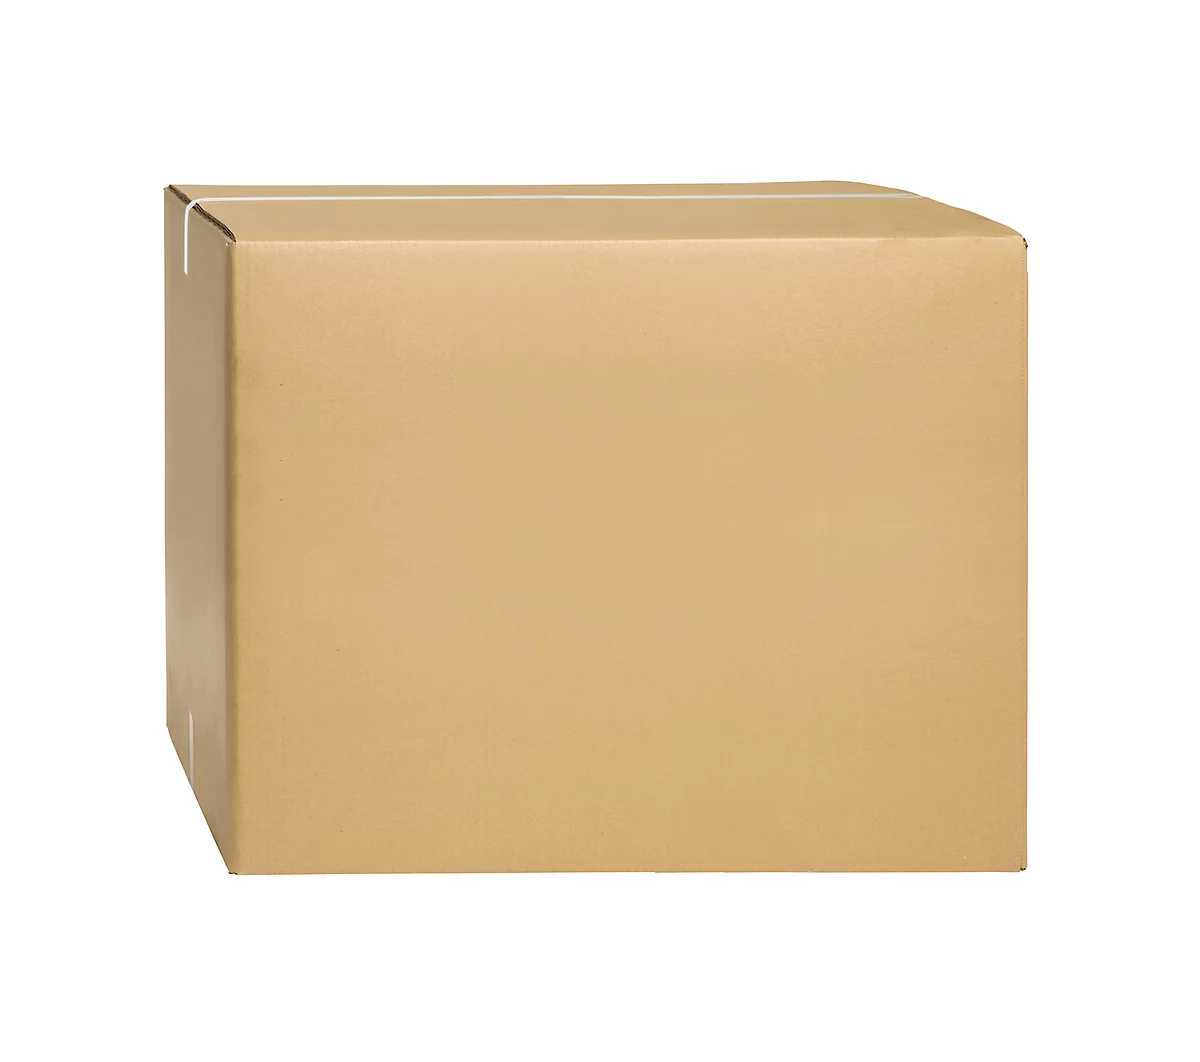 Cajas plegables de cartón ondulado, doble pared, 600 x 600 x 500 mm, marrón